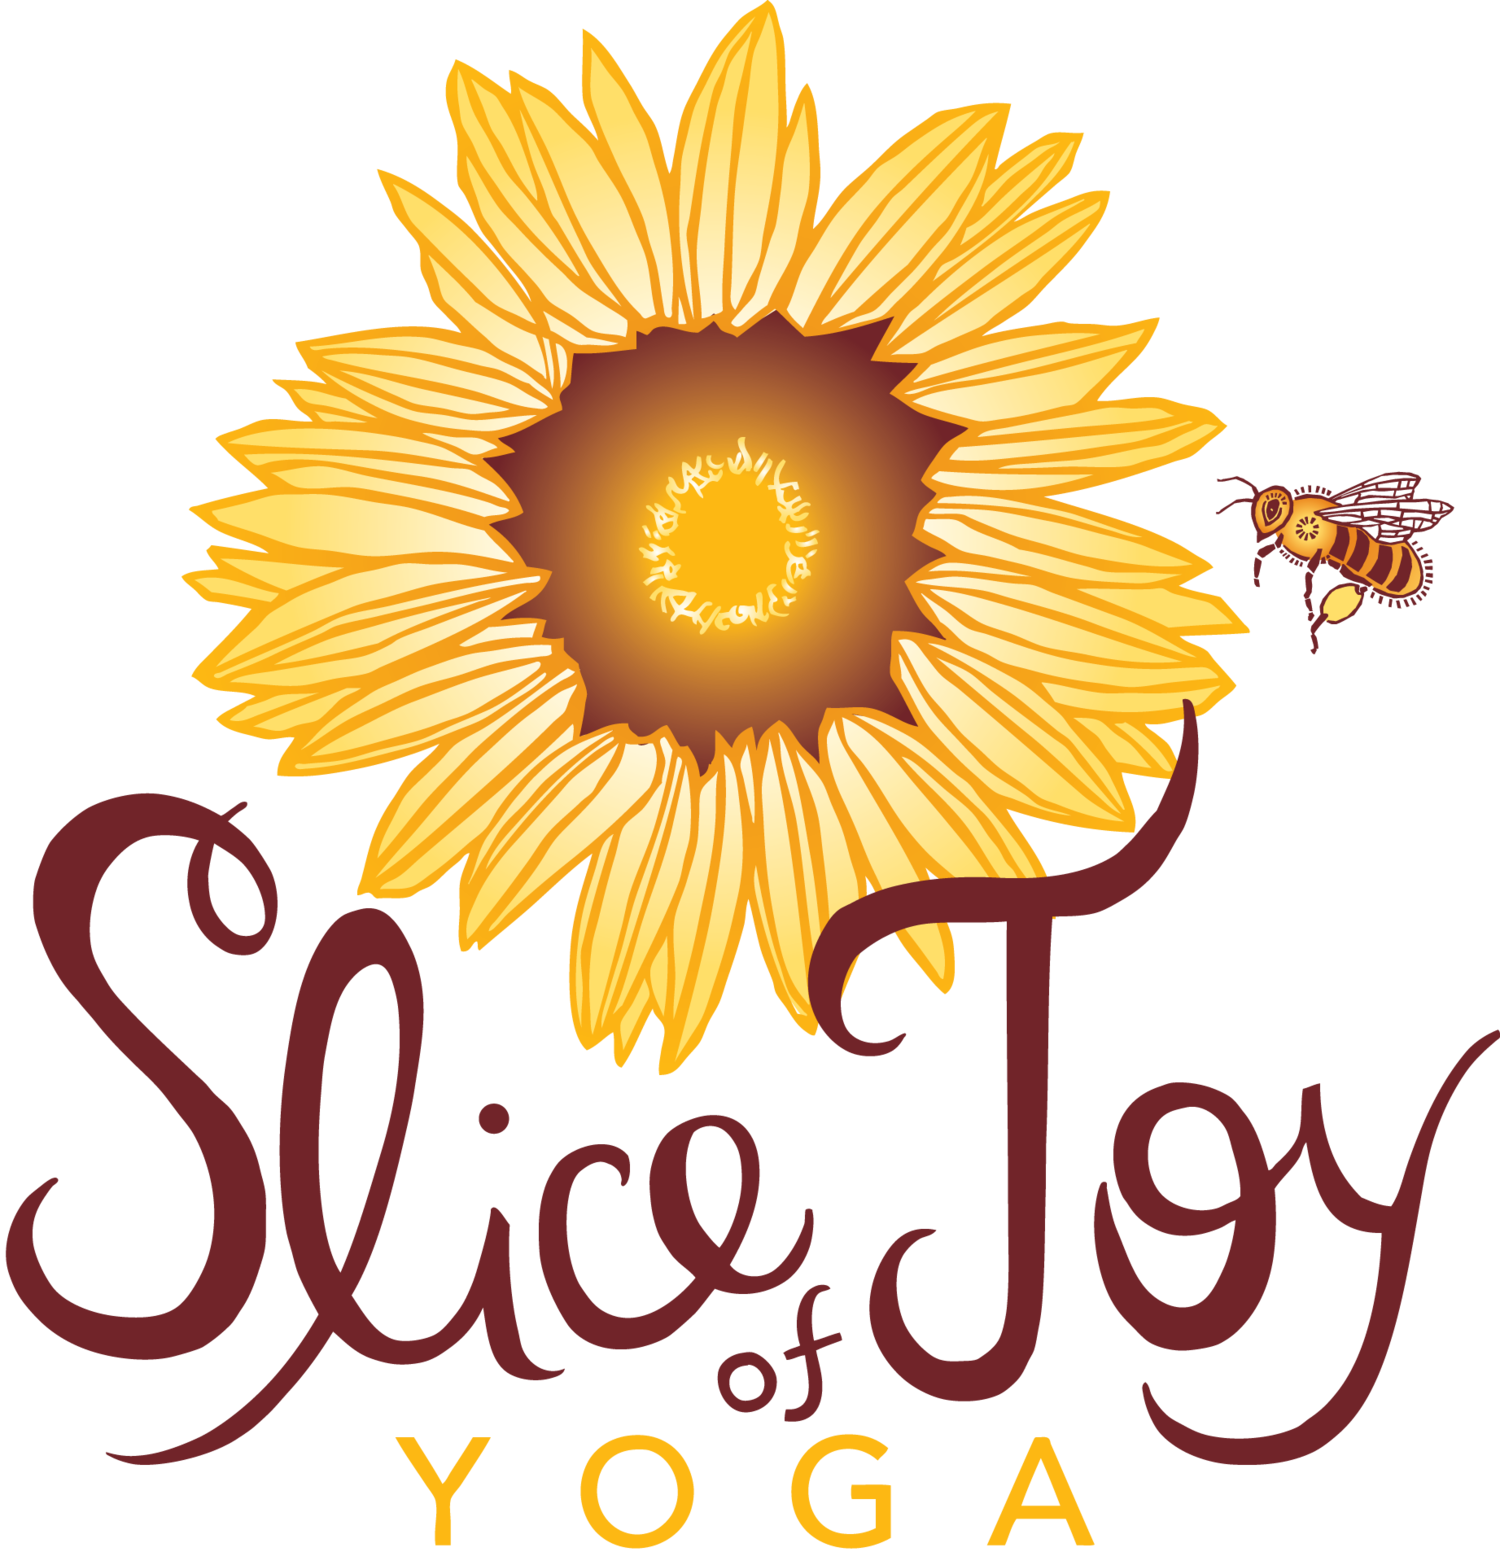 Slice of Joy Yoga